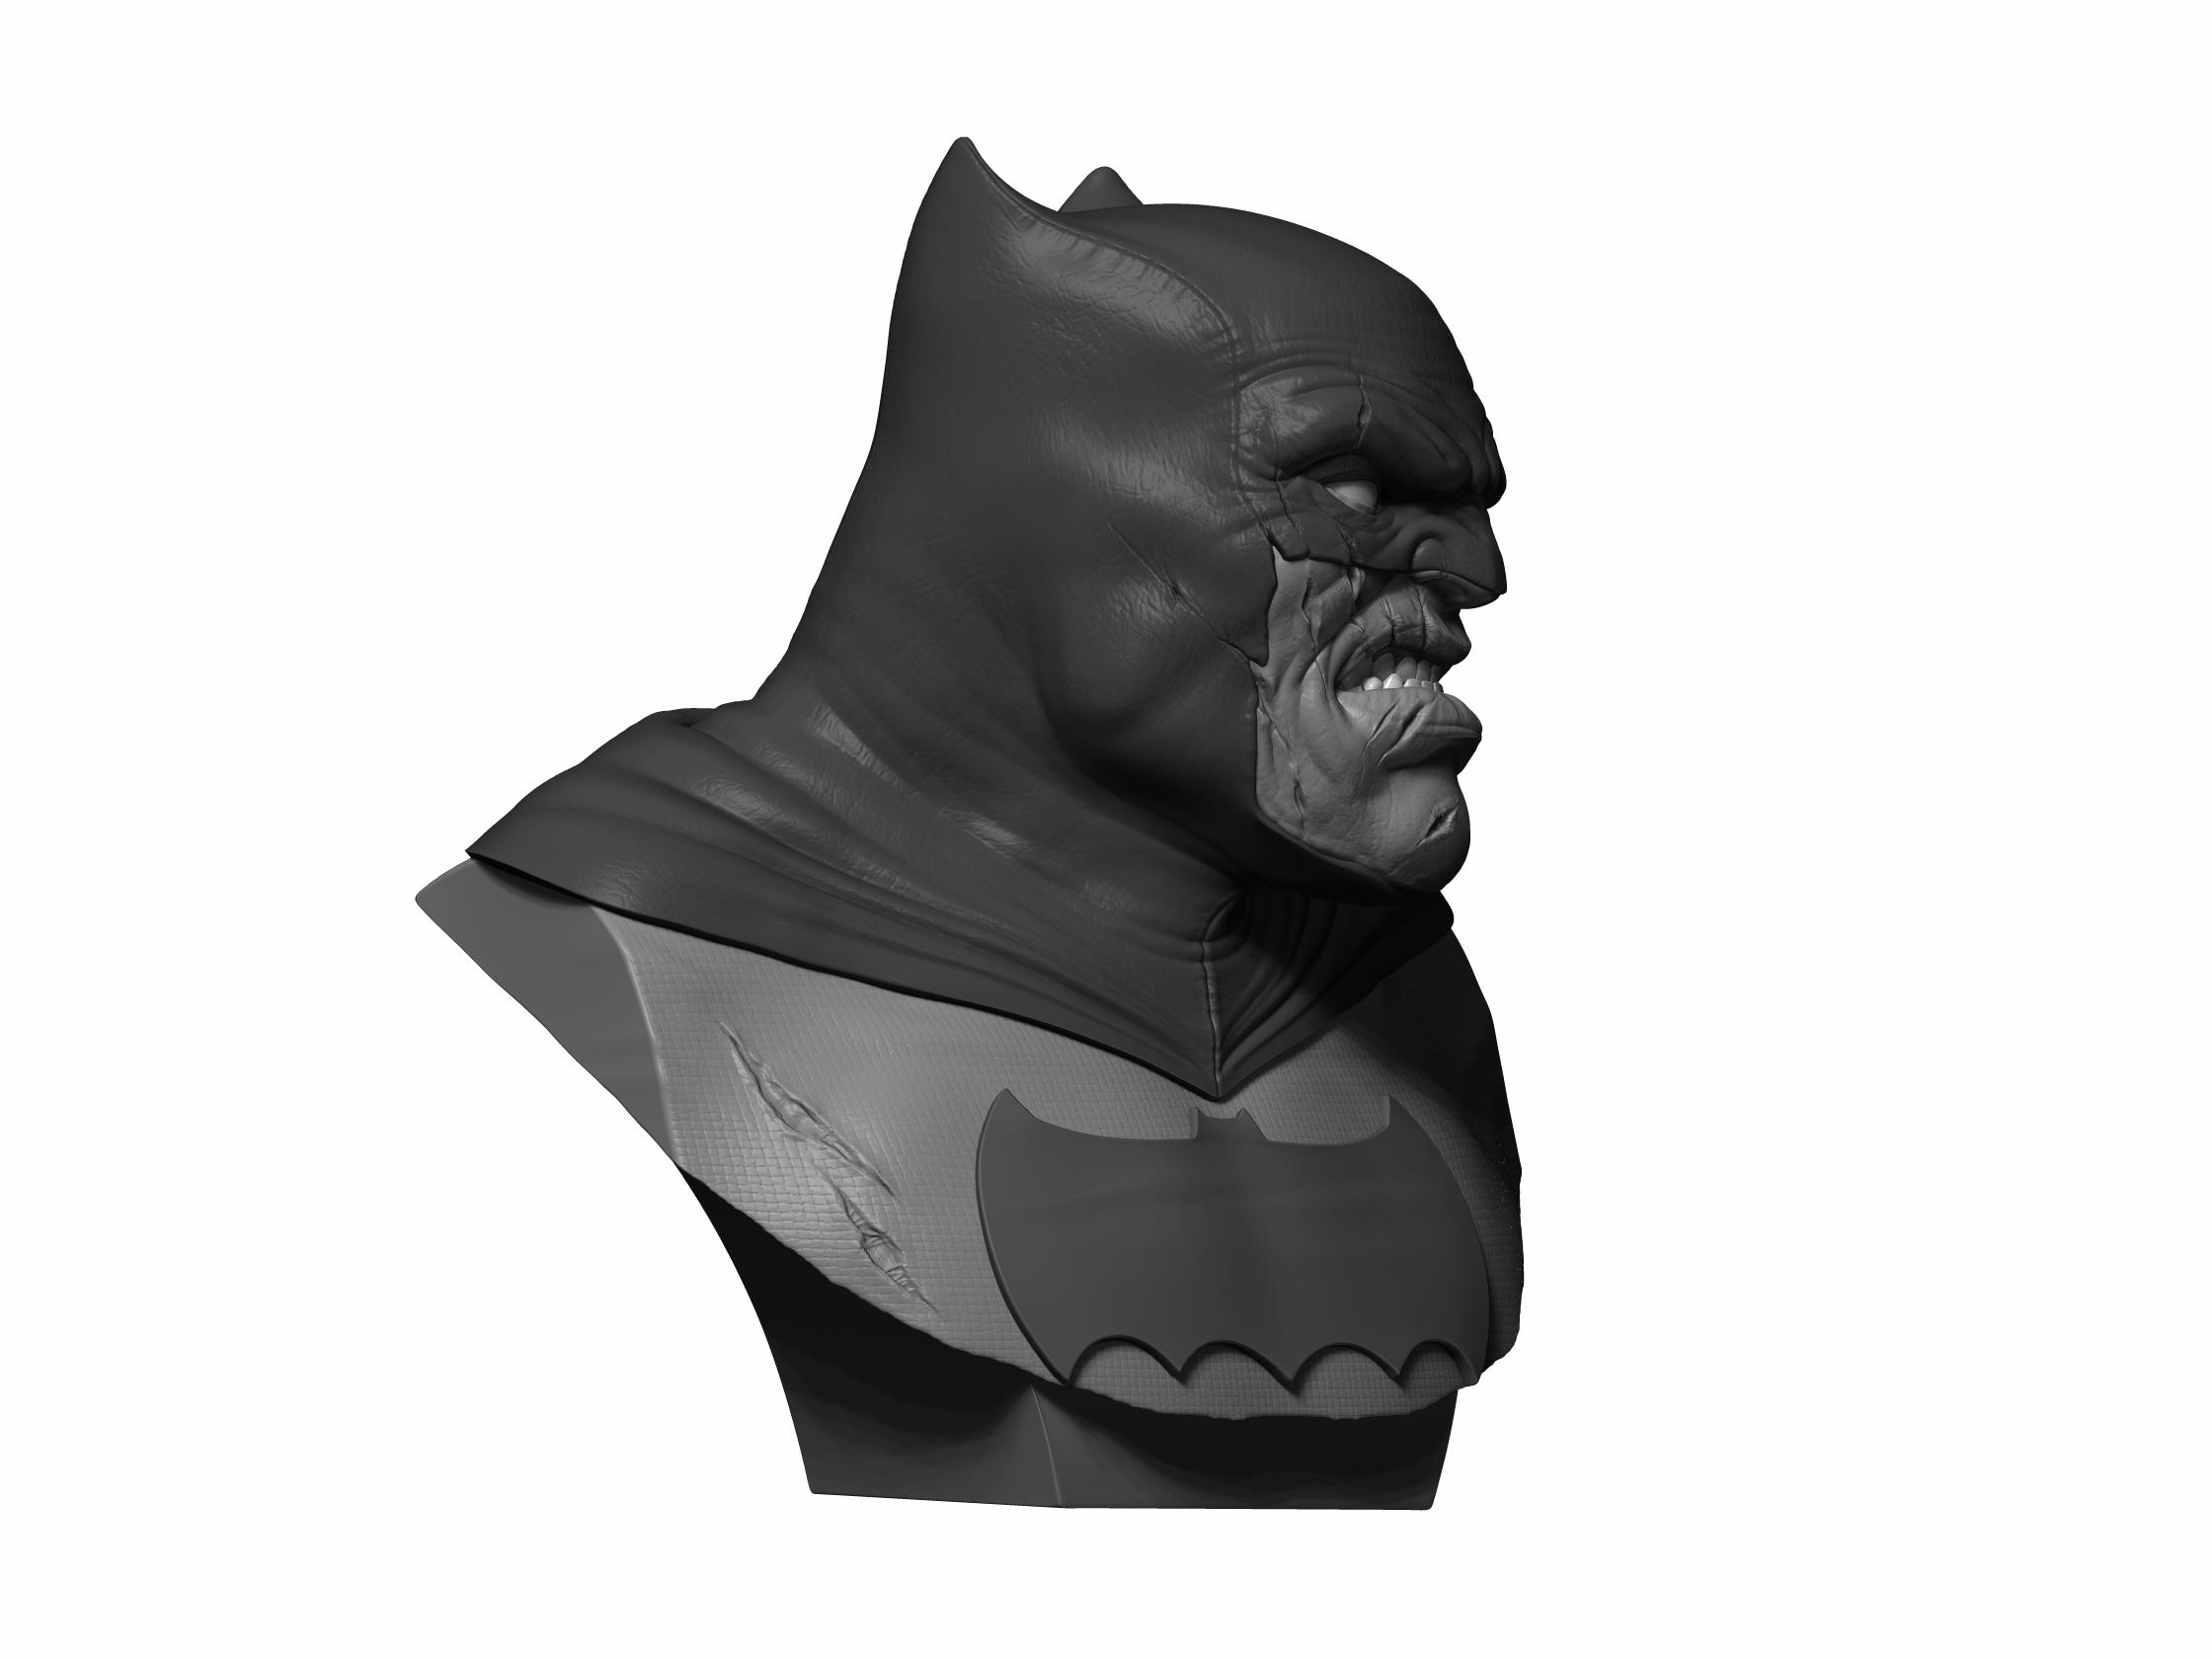 Batman Bust 3d model